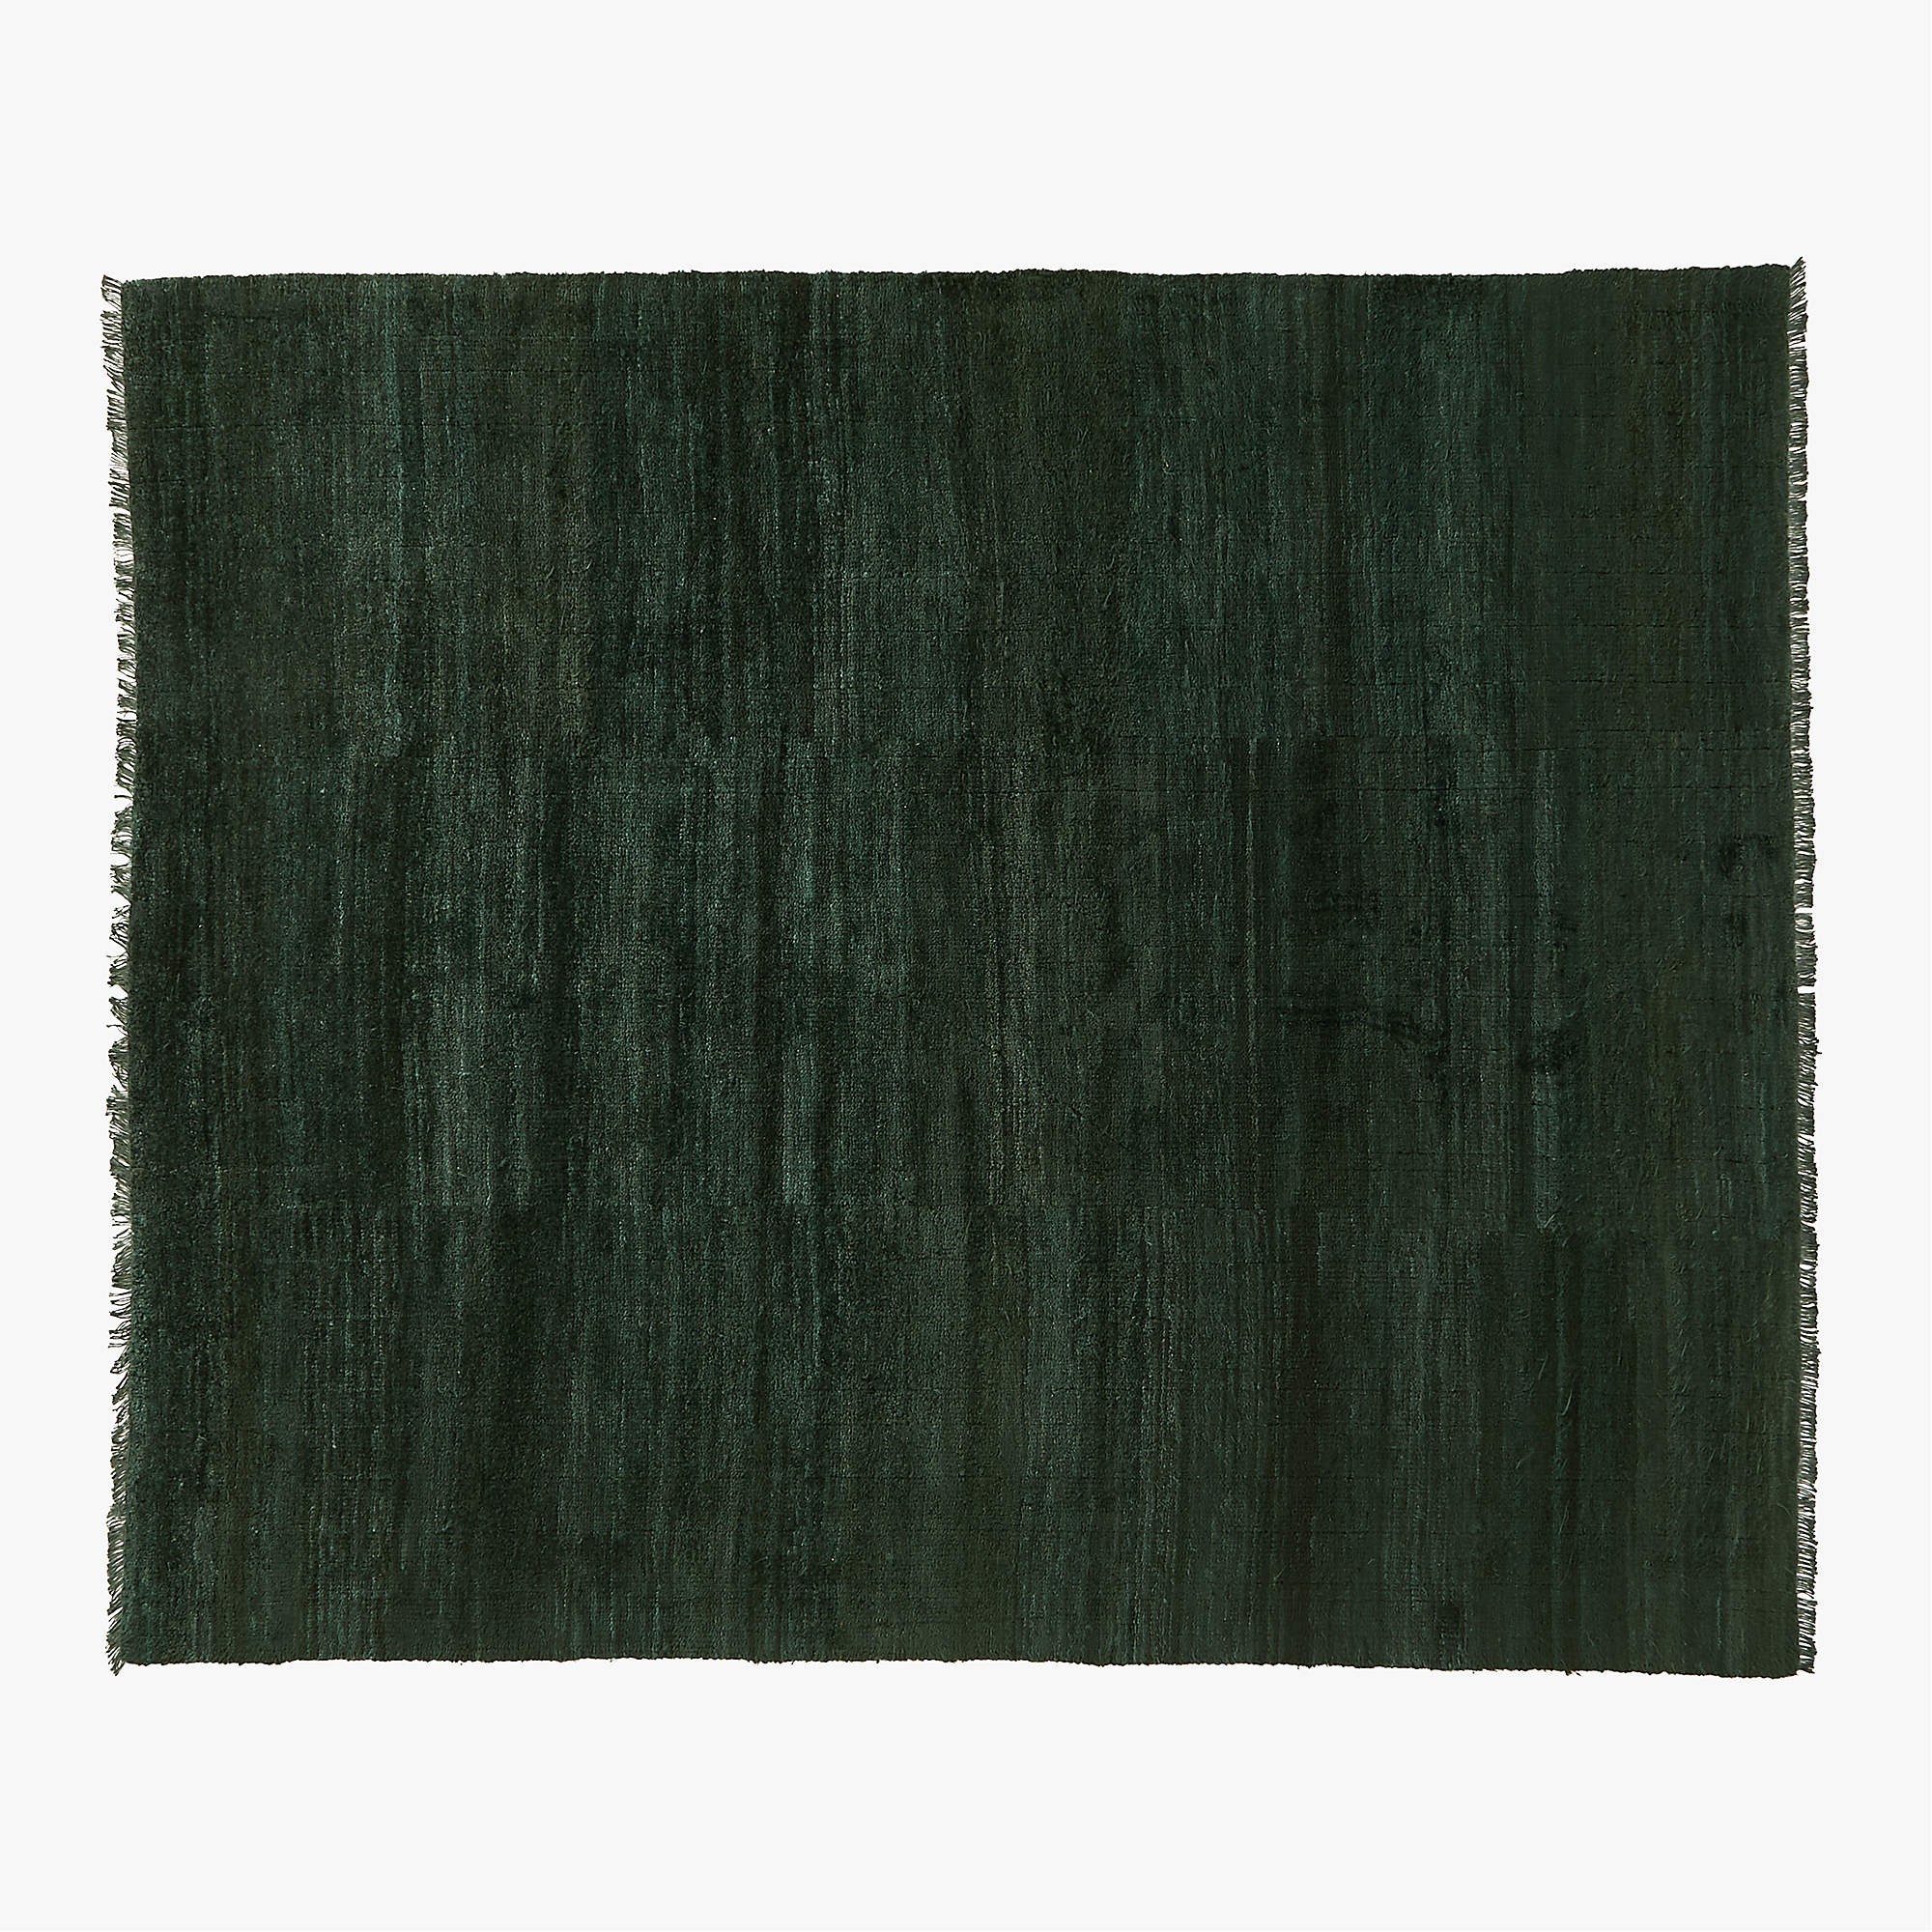 25 x 23 x 1000 plain weave, matte - green thread